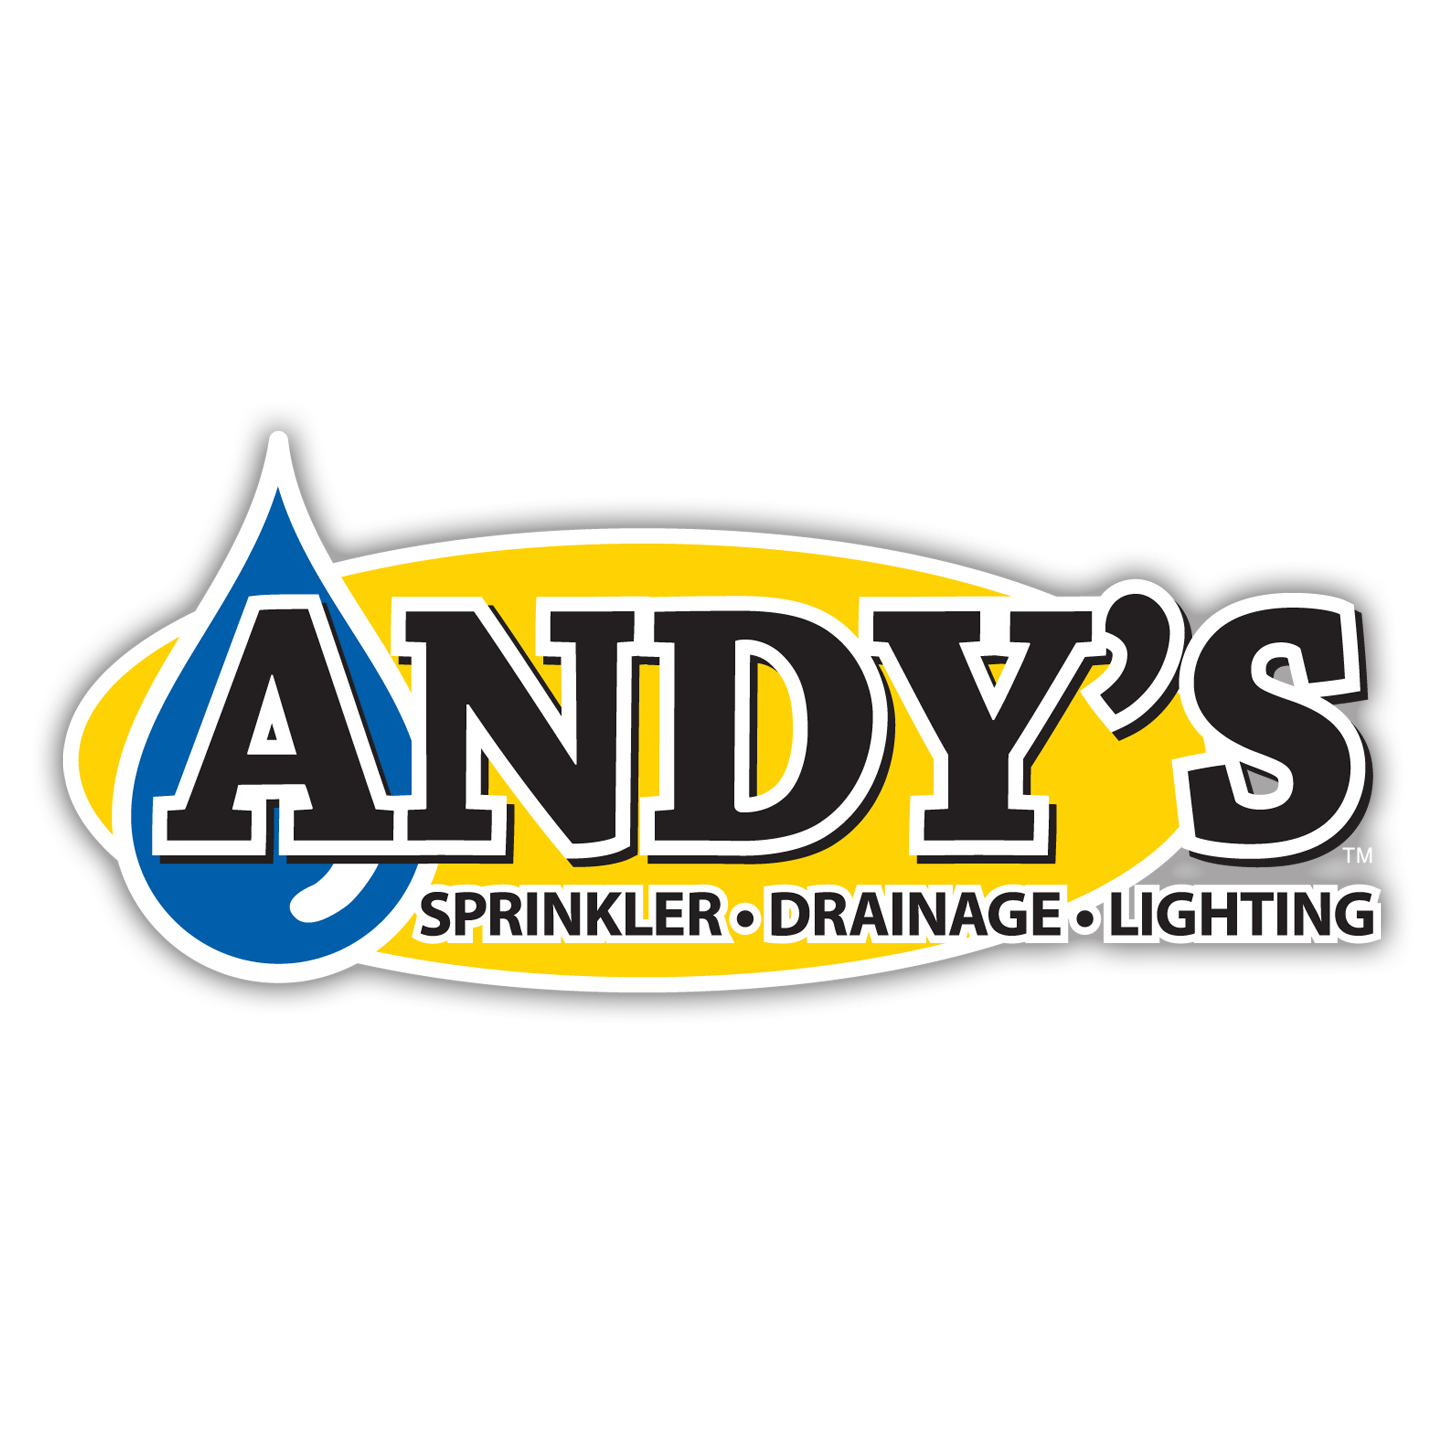 Andy's Sprinkler, Drainage & Lighting - Oklahoma City, OK 73114 - (833)929-3229 | ShowMeLocal.com